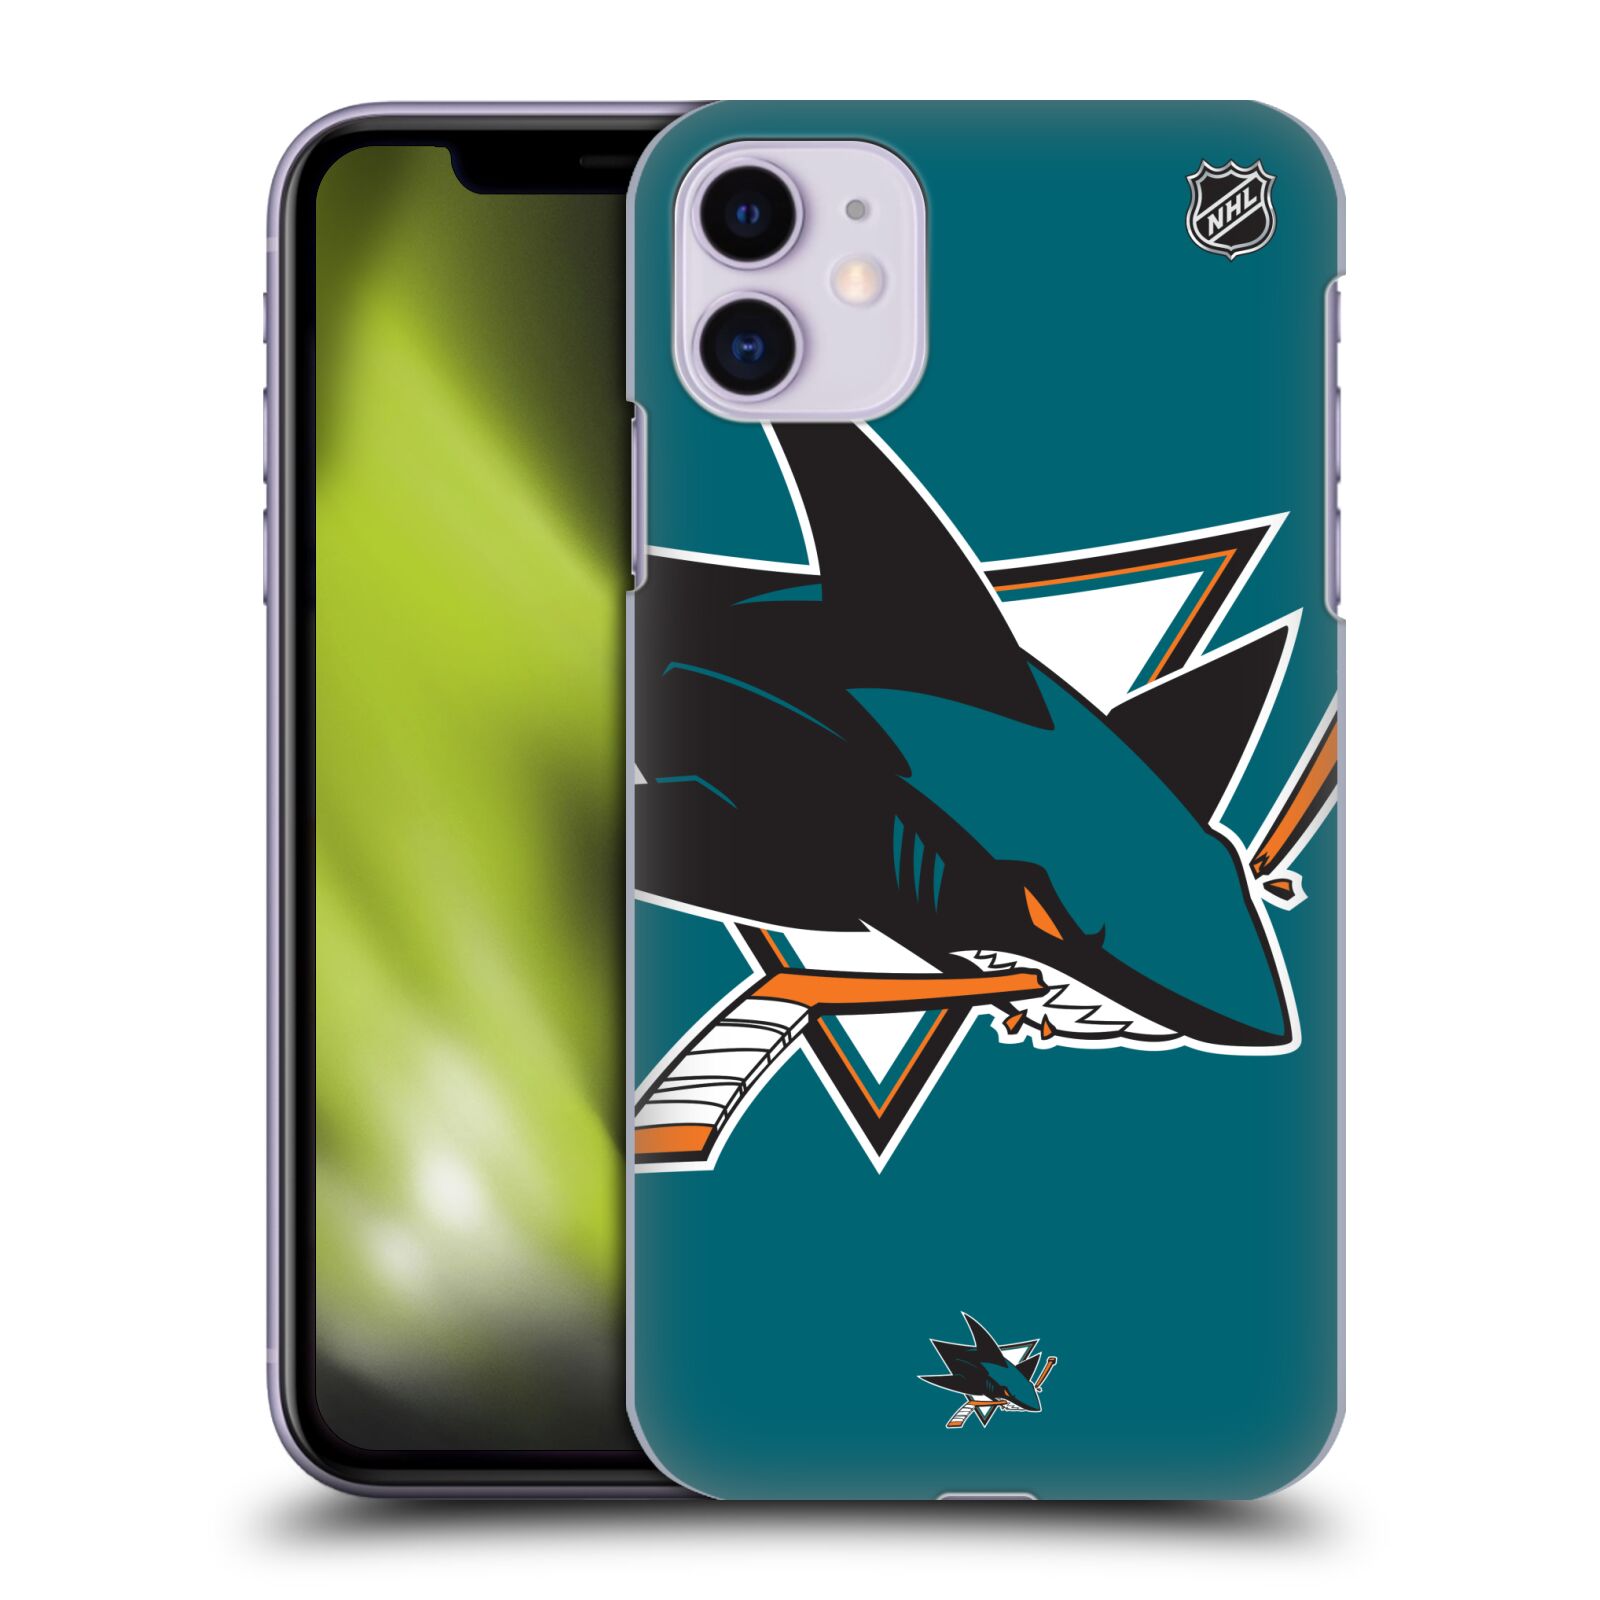 Pouzdro na mobil Apple Iphone 11 - HEAD CASE - Hokej NHL - San Jose Sharks - Velký znak